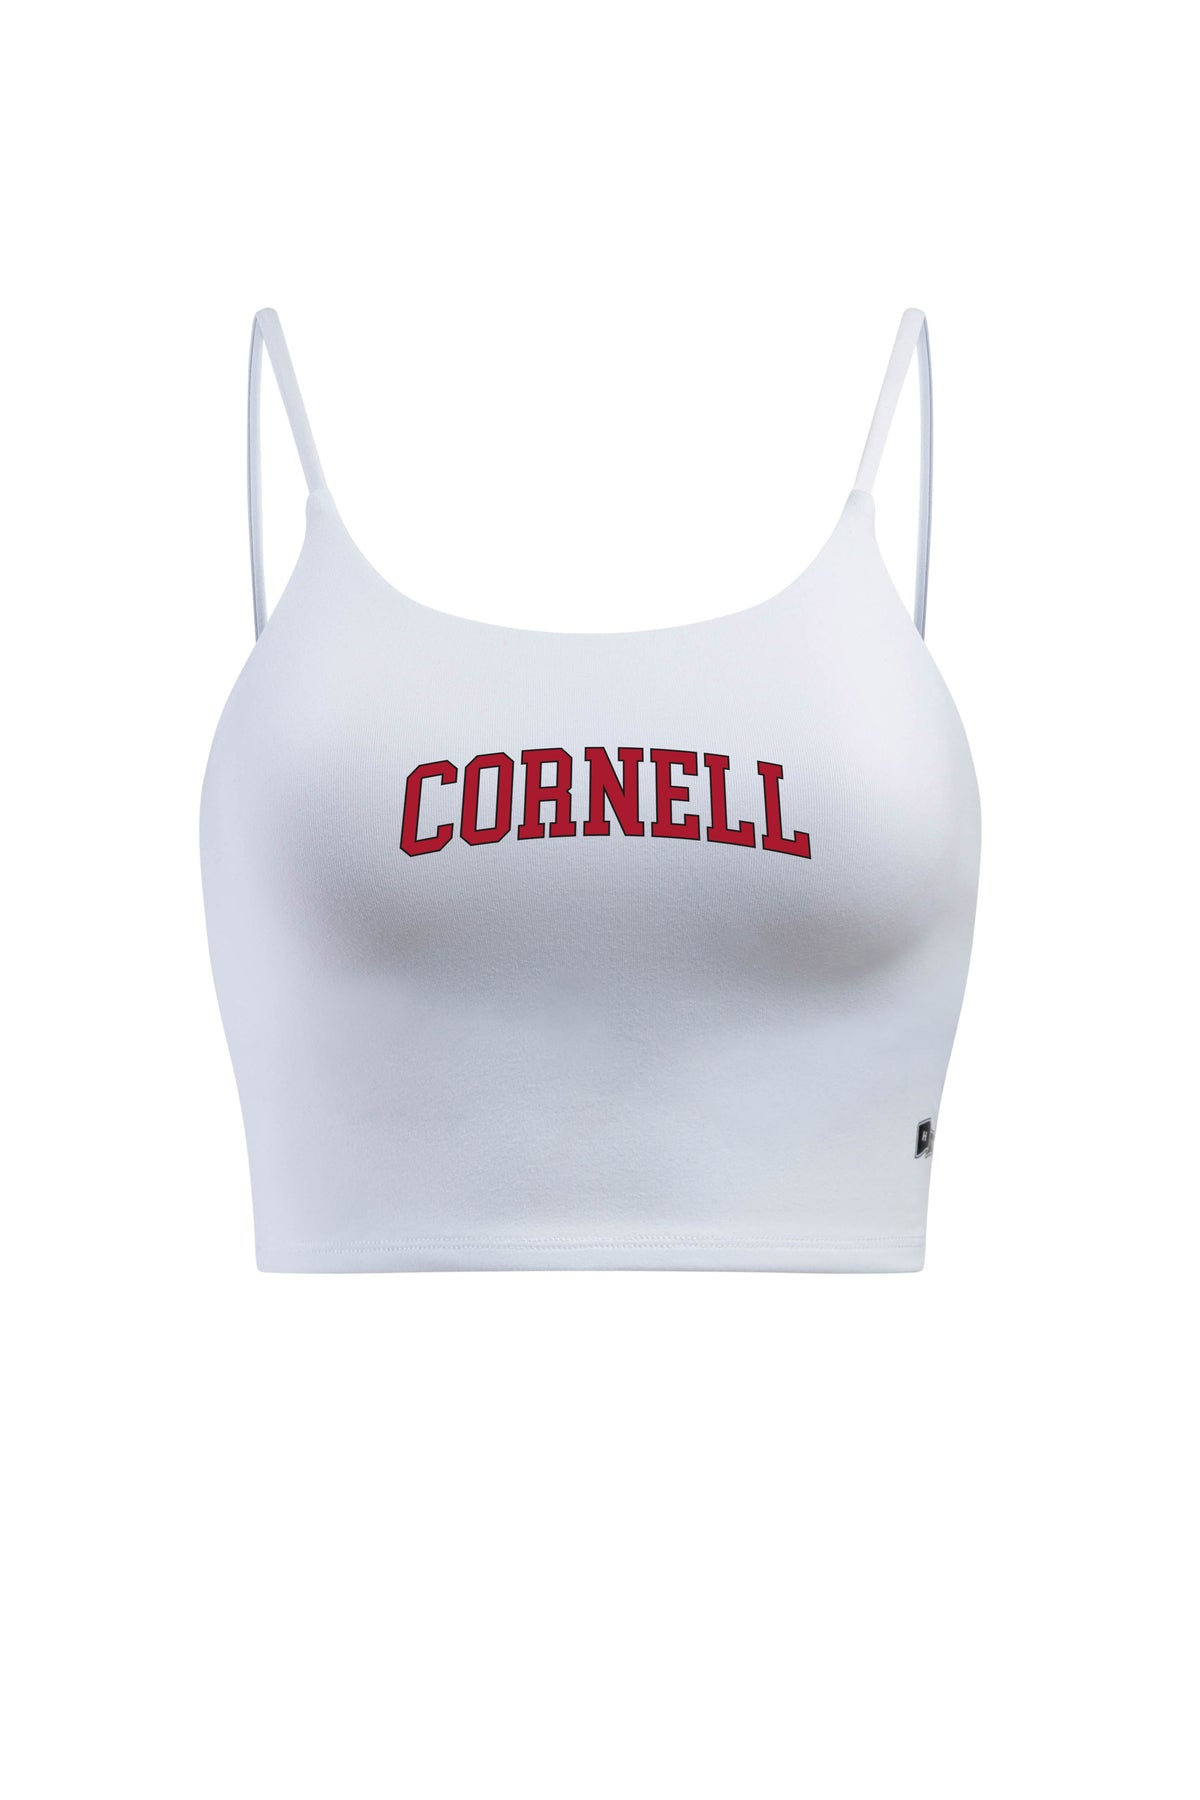 Cornell University Bra Tank Top